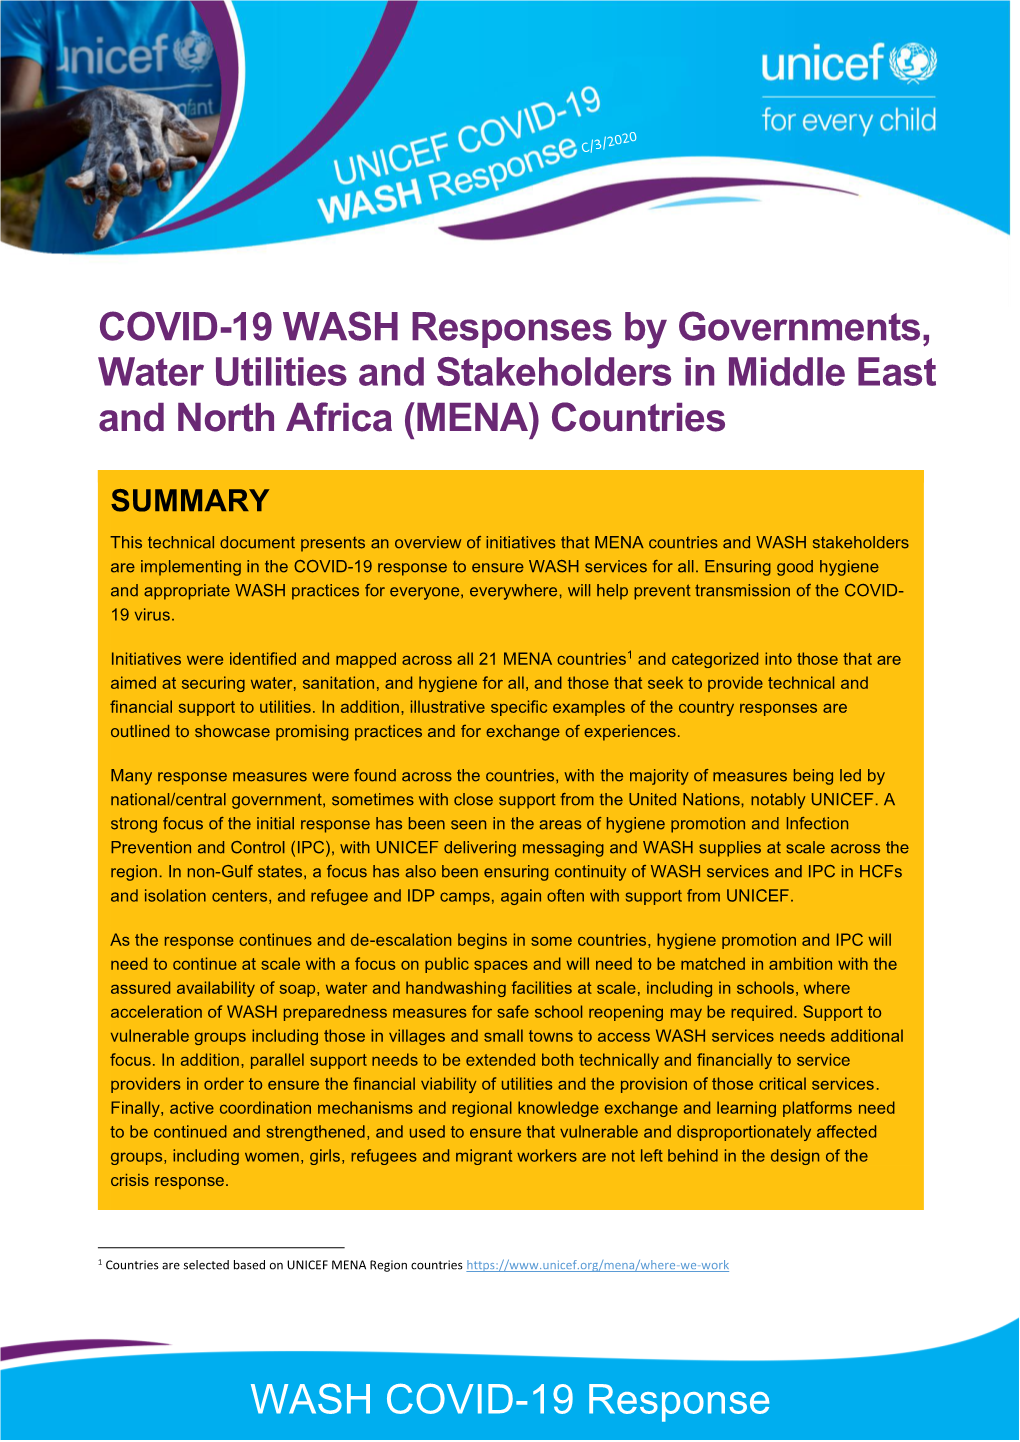 WASH COVID-19 Response